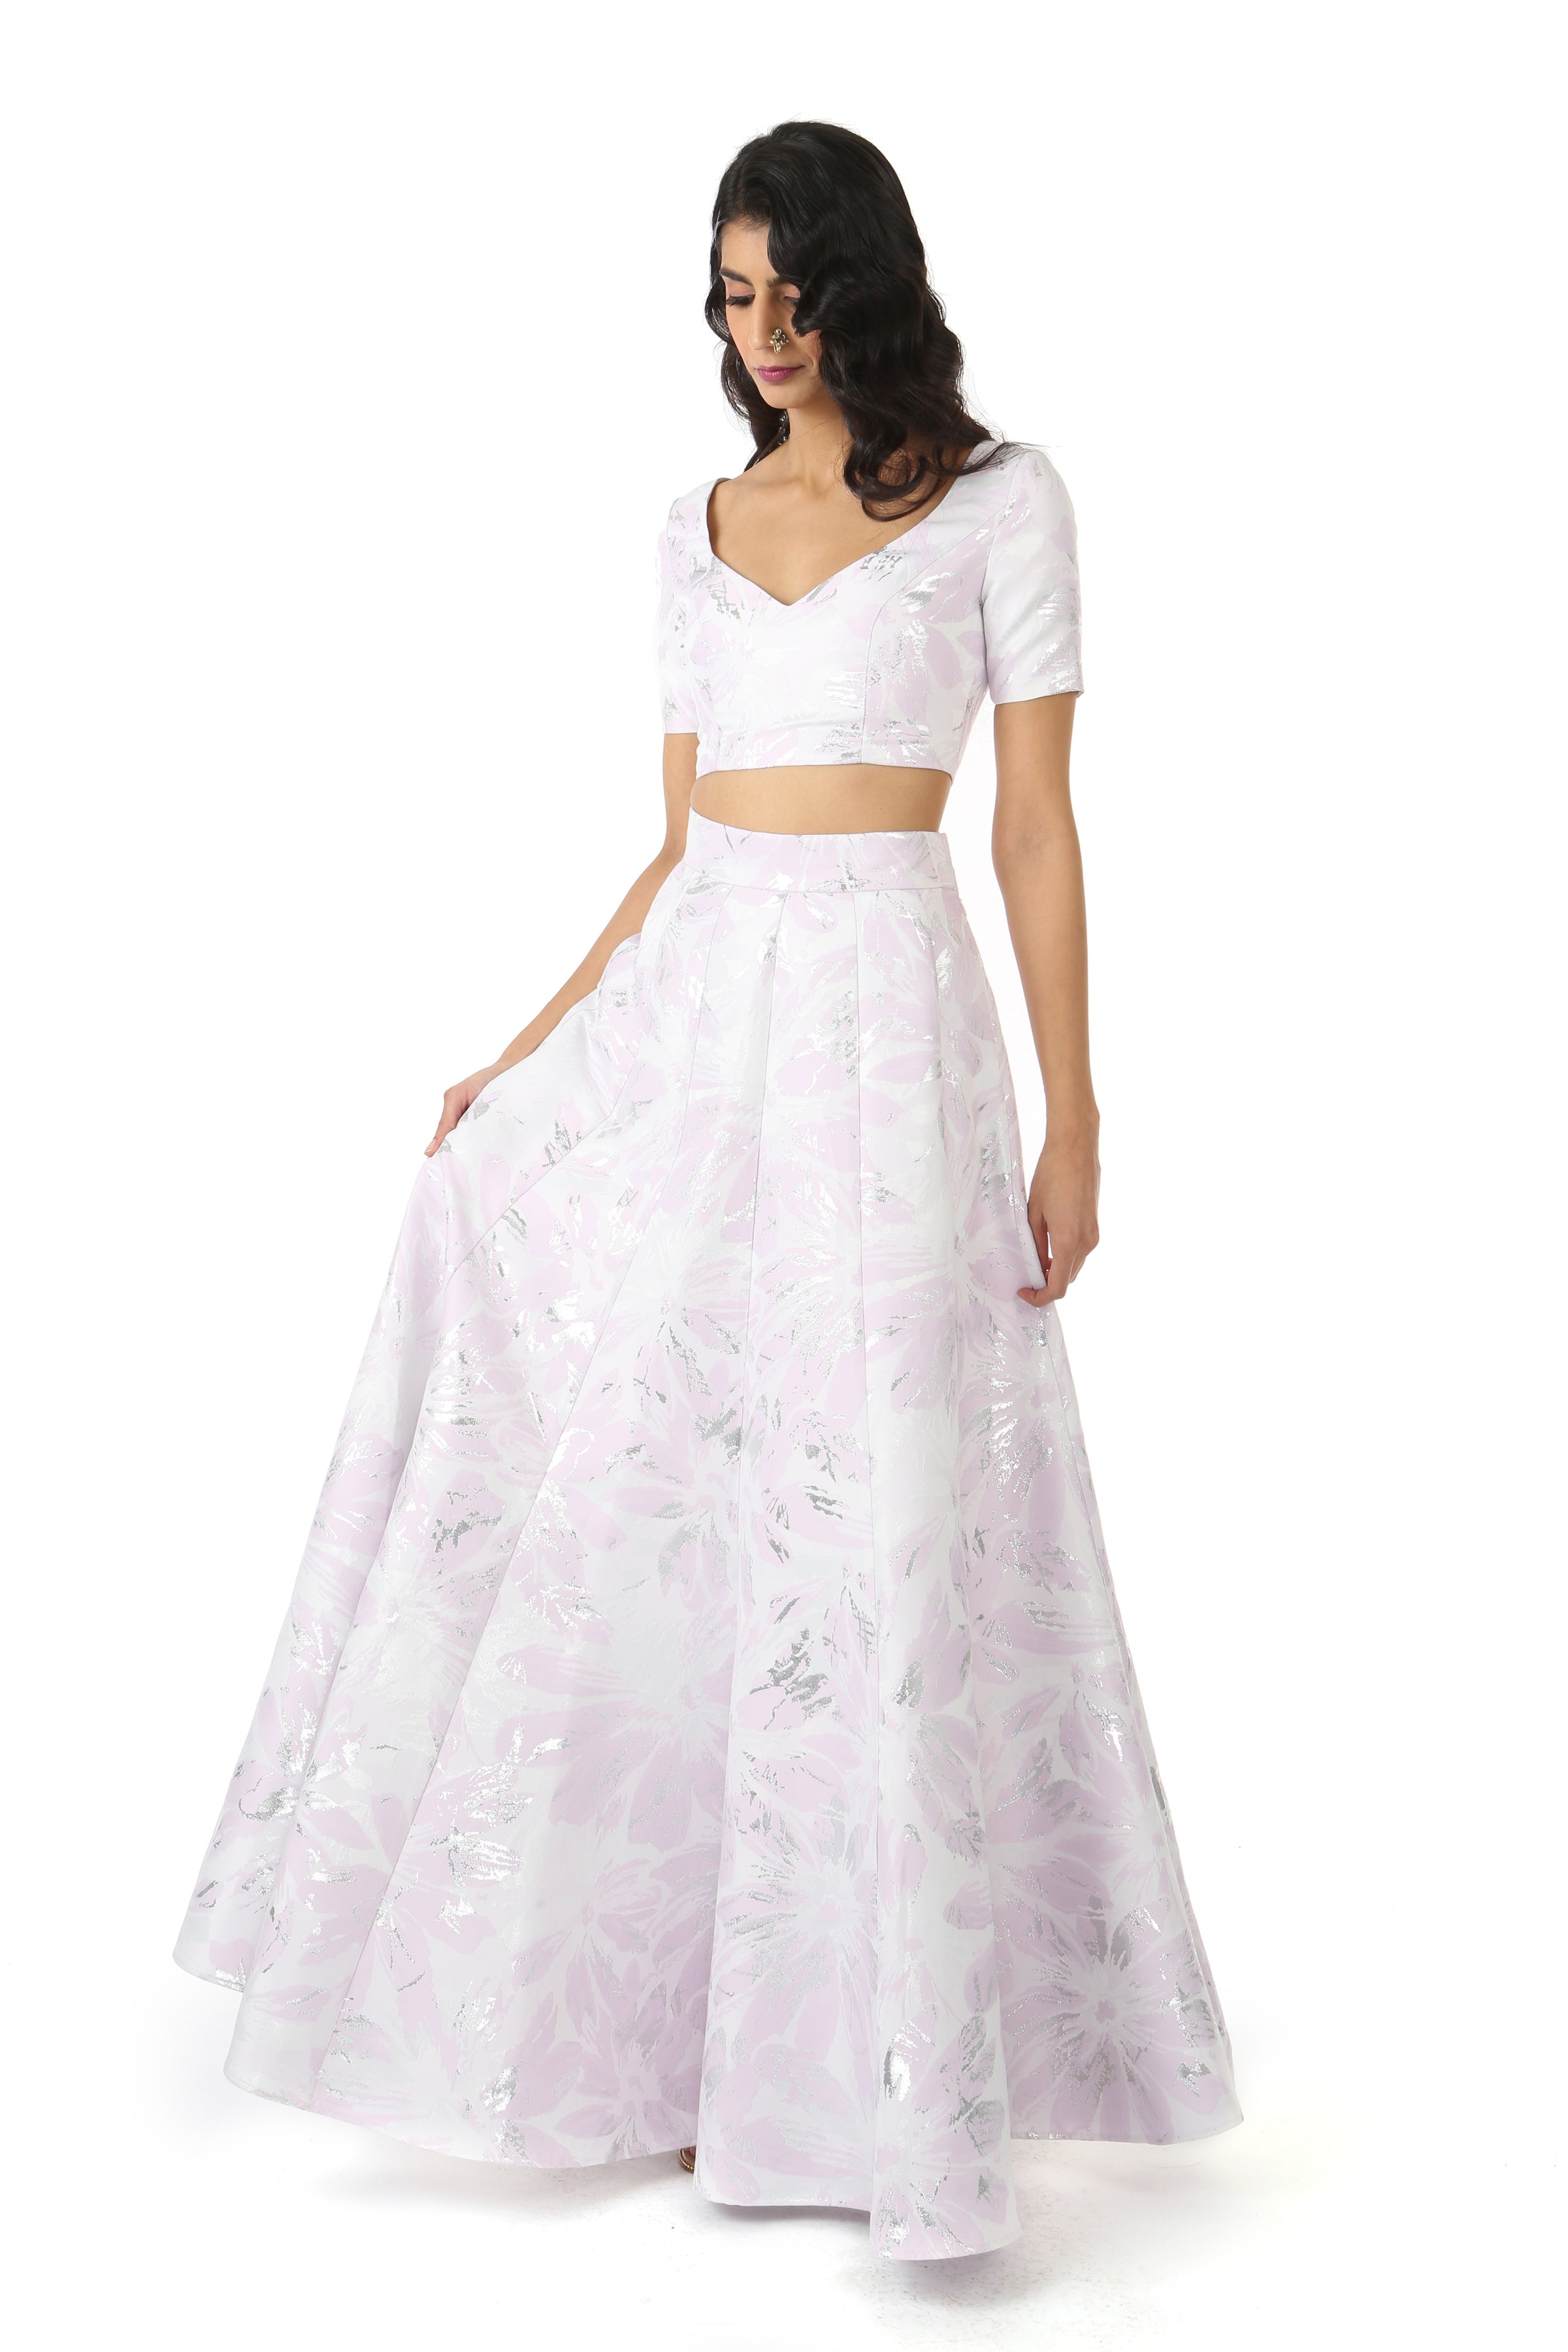 Harleen Kaur Metallic Silver and Lavender floral print on DIVYA lehenga skirt - Front View